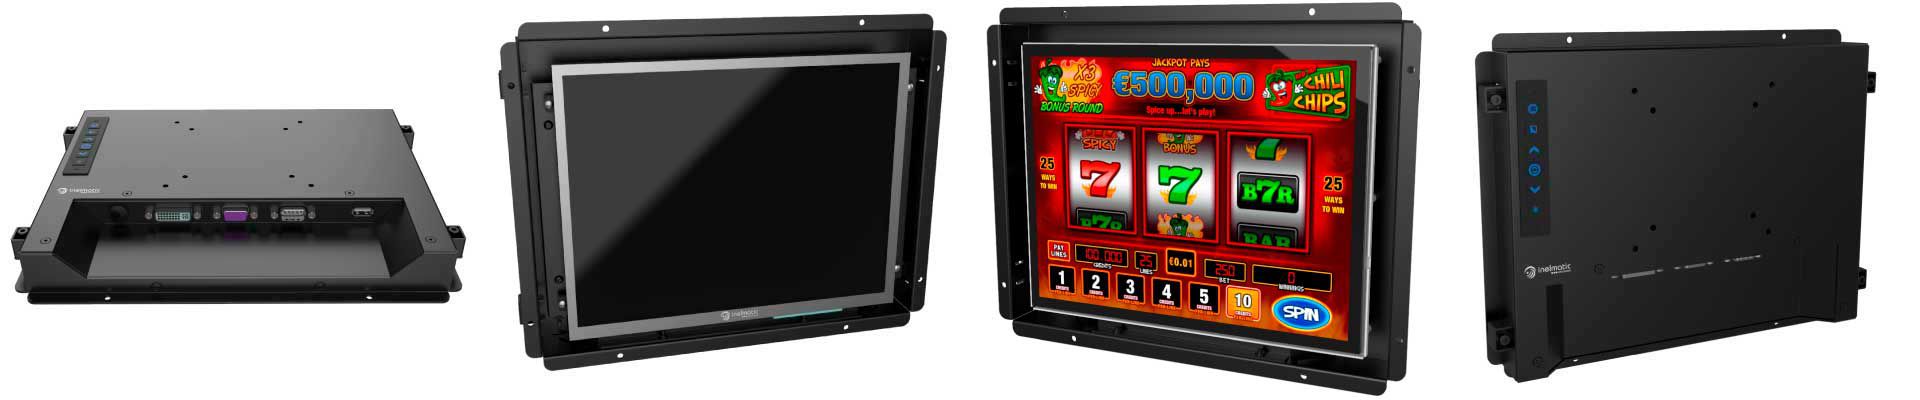 Casino gaming and arcade games digital signage display - Inelmatic